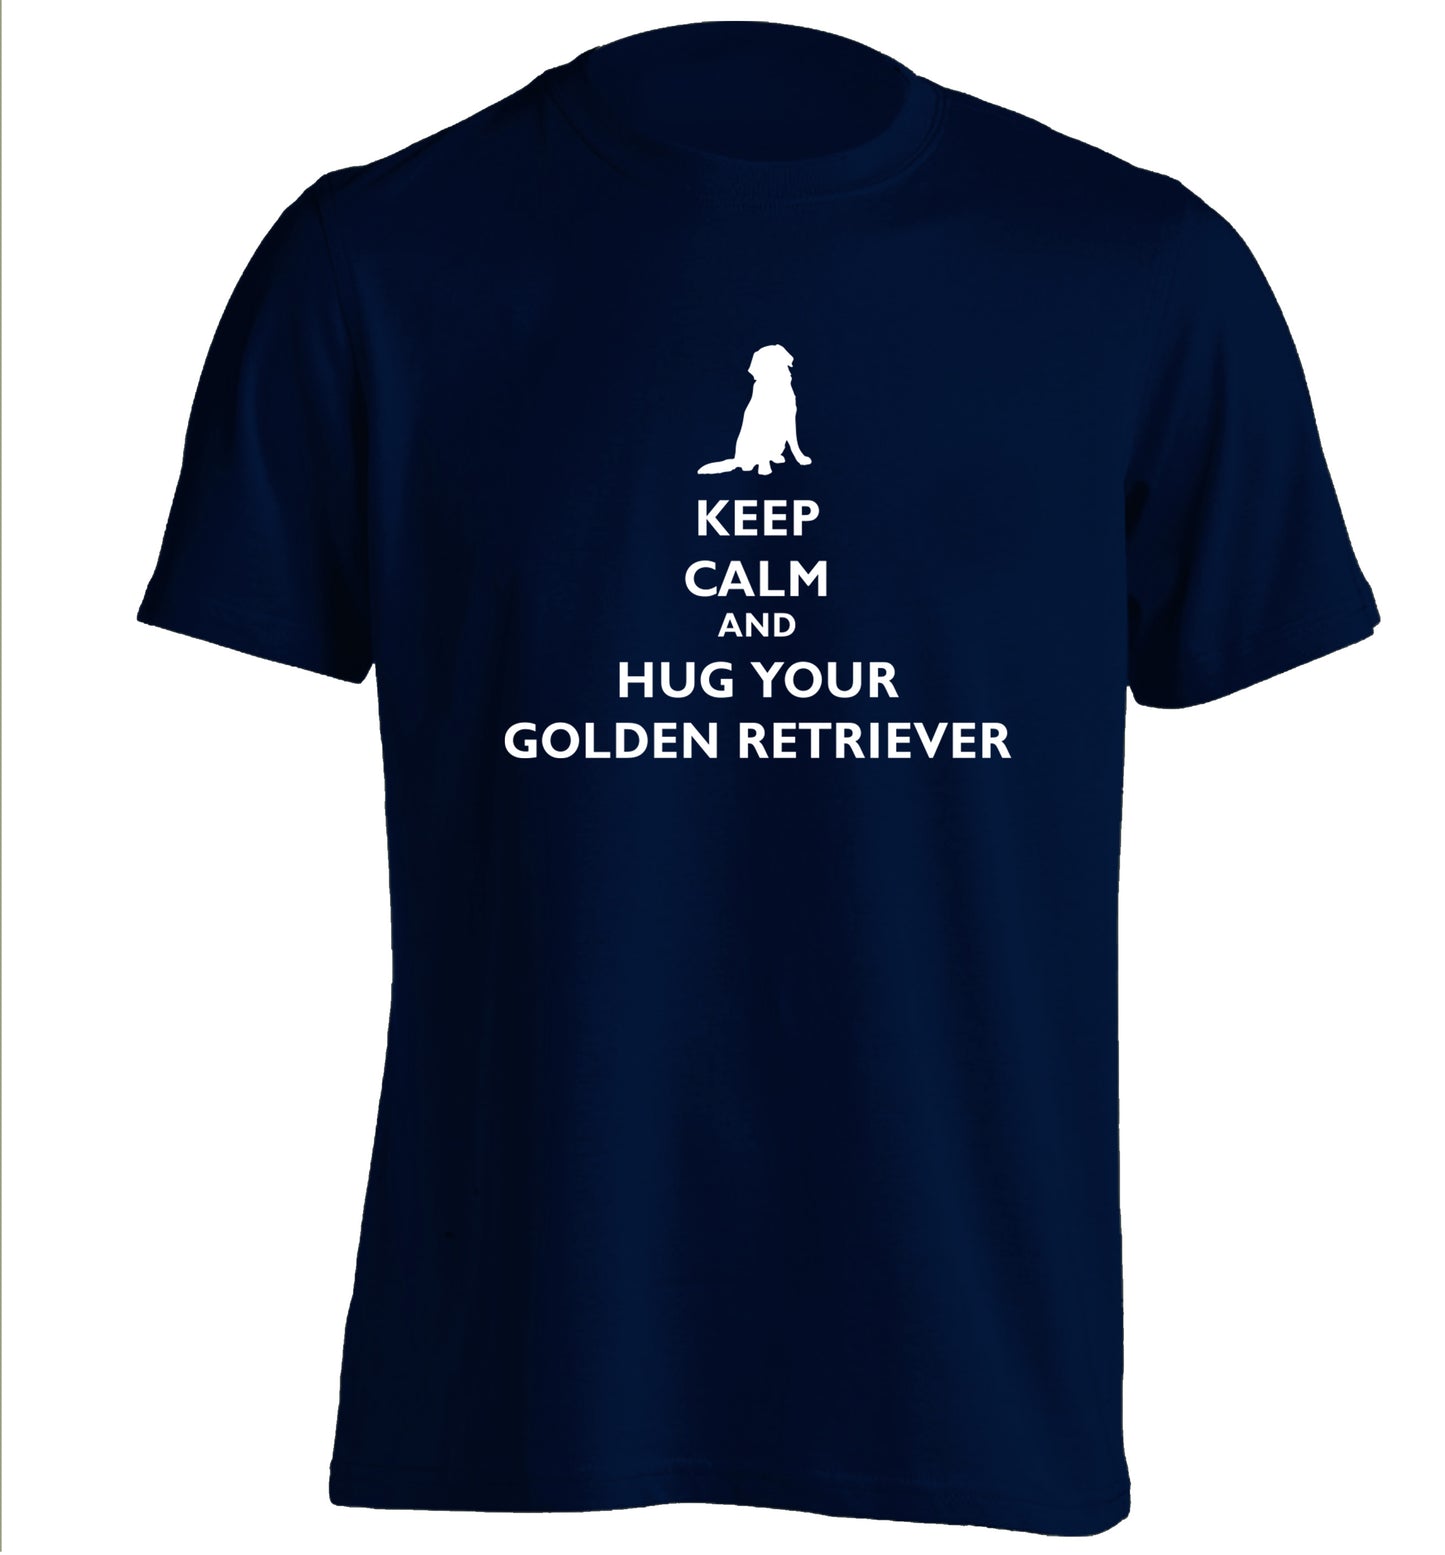 Keep calm and hug your golden retriever adults unisex navy Tshirt 2XL